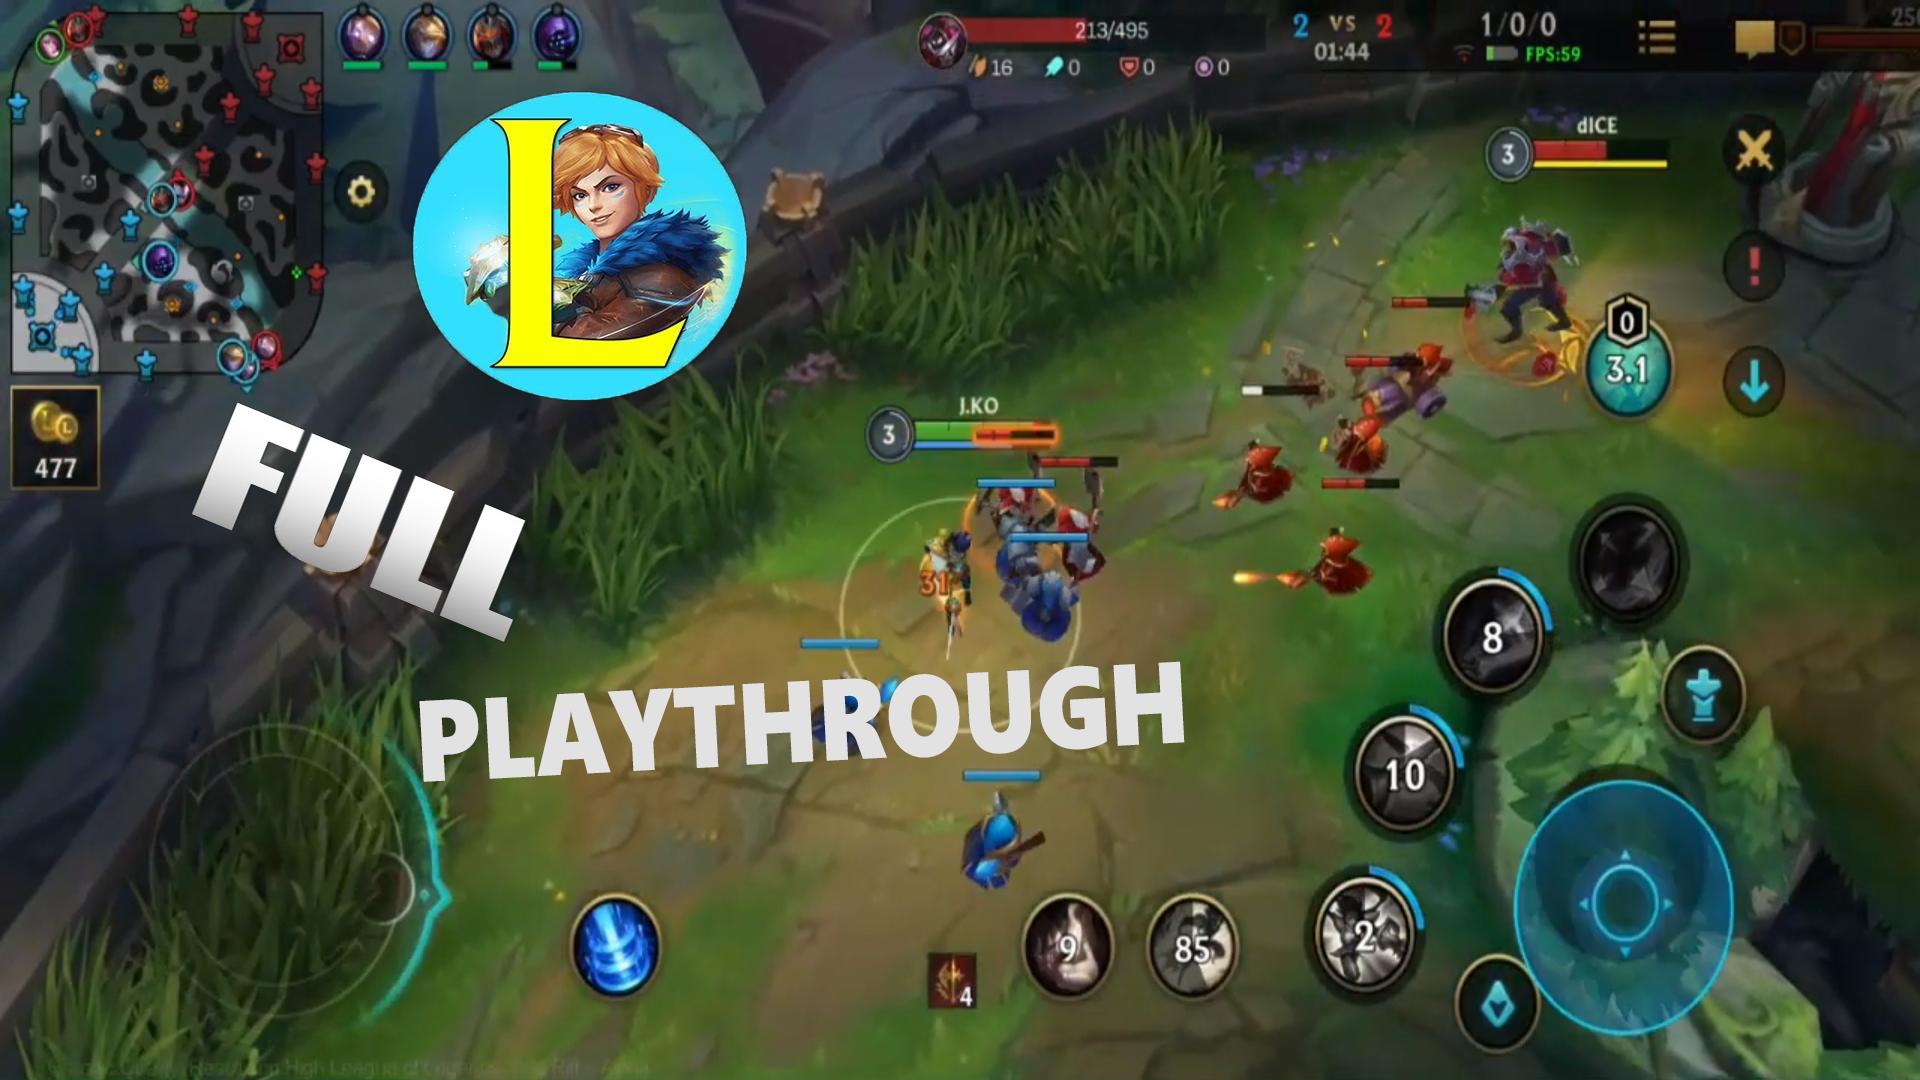 LoL : Wild Rift mobile 2020 Playthrough 1.0 Screenshot 1